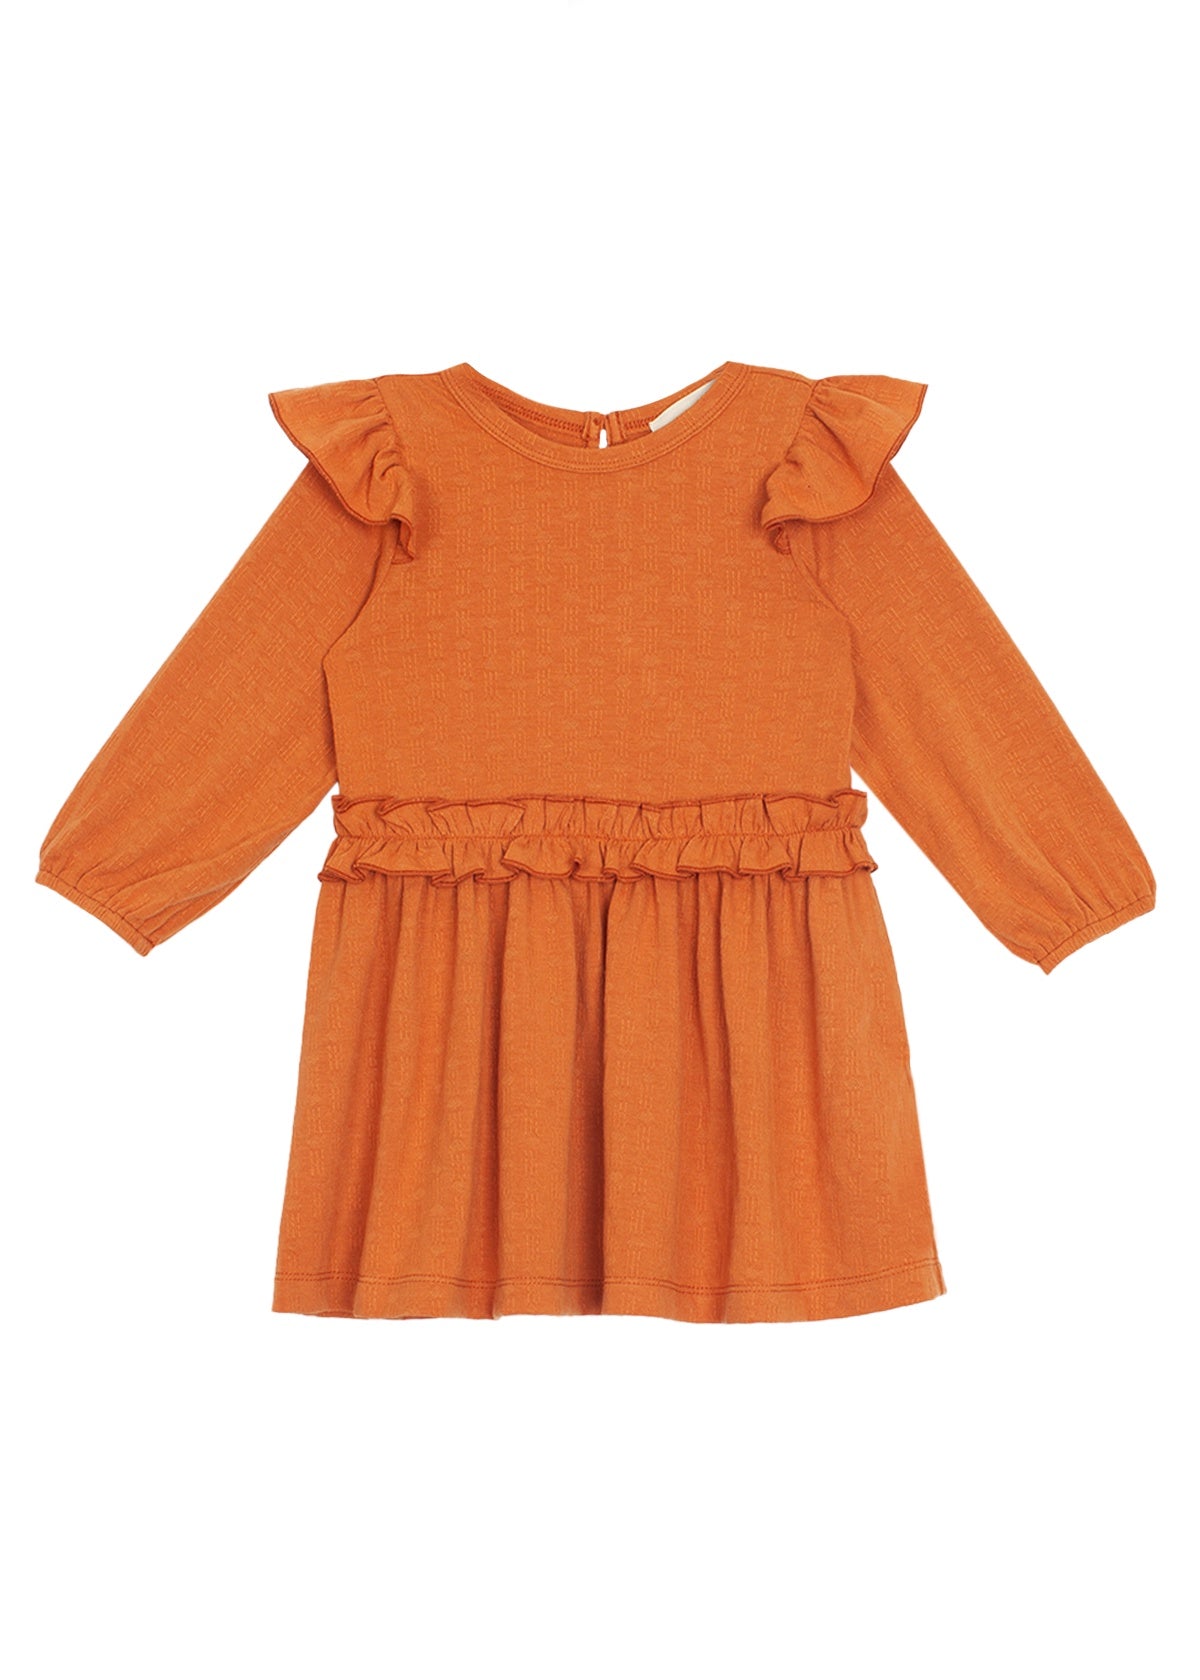 Tangerine Textured Dress